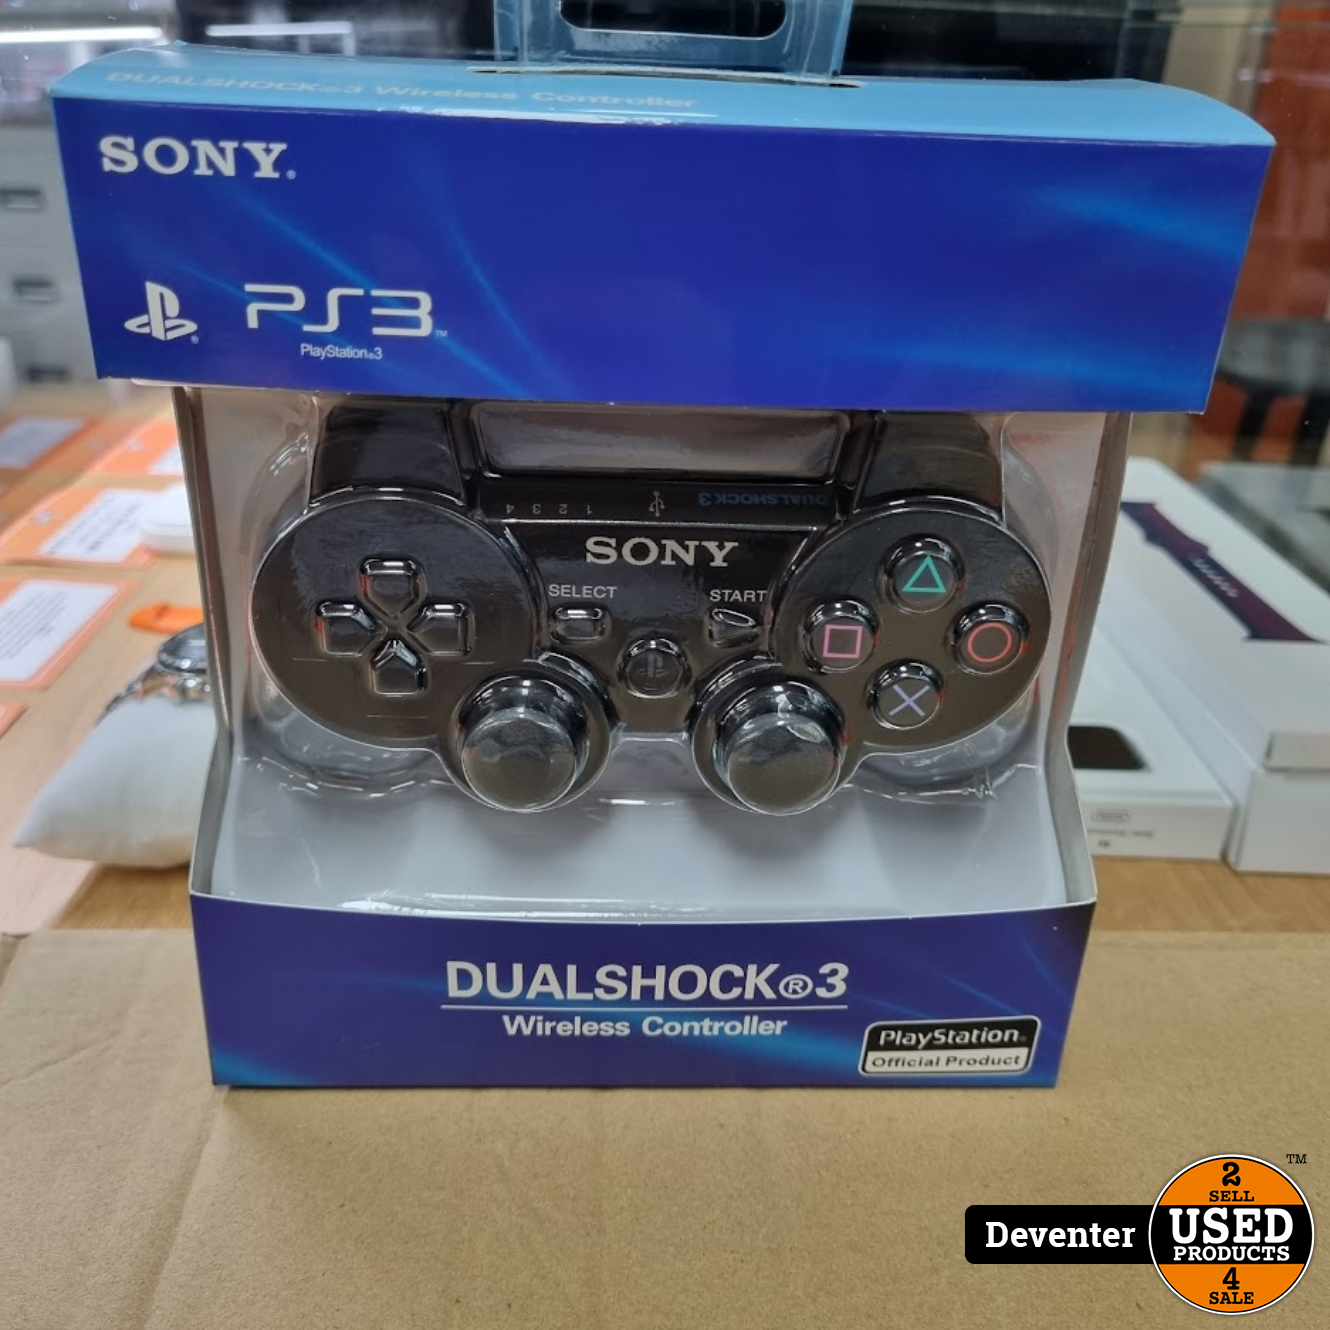 Ver weg wagon rijm Sony Playstation 3 DualShock 3 Controller II Nieuw in doos - Used Products  Deventer